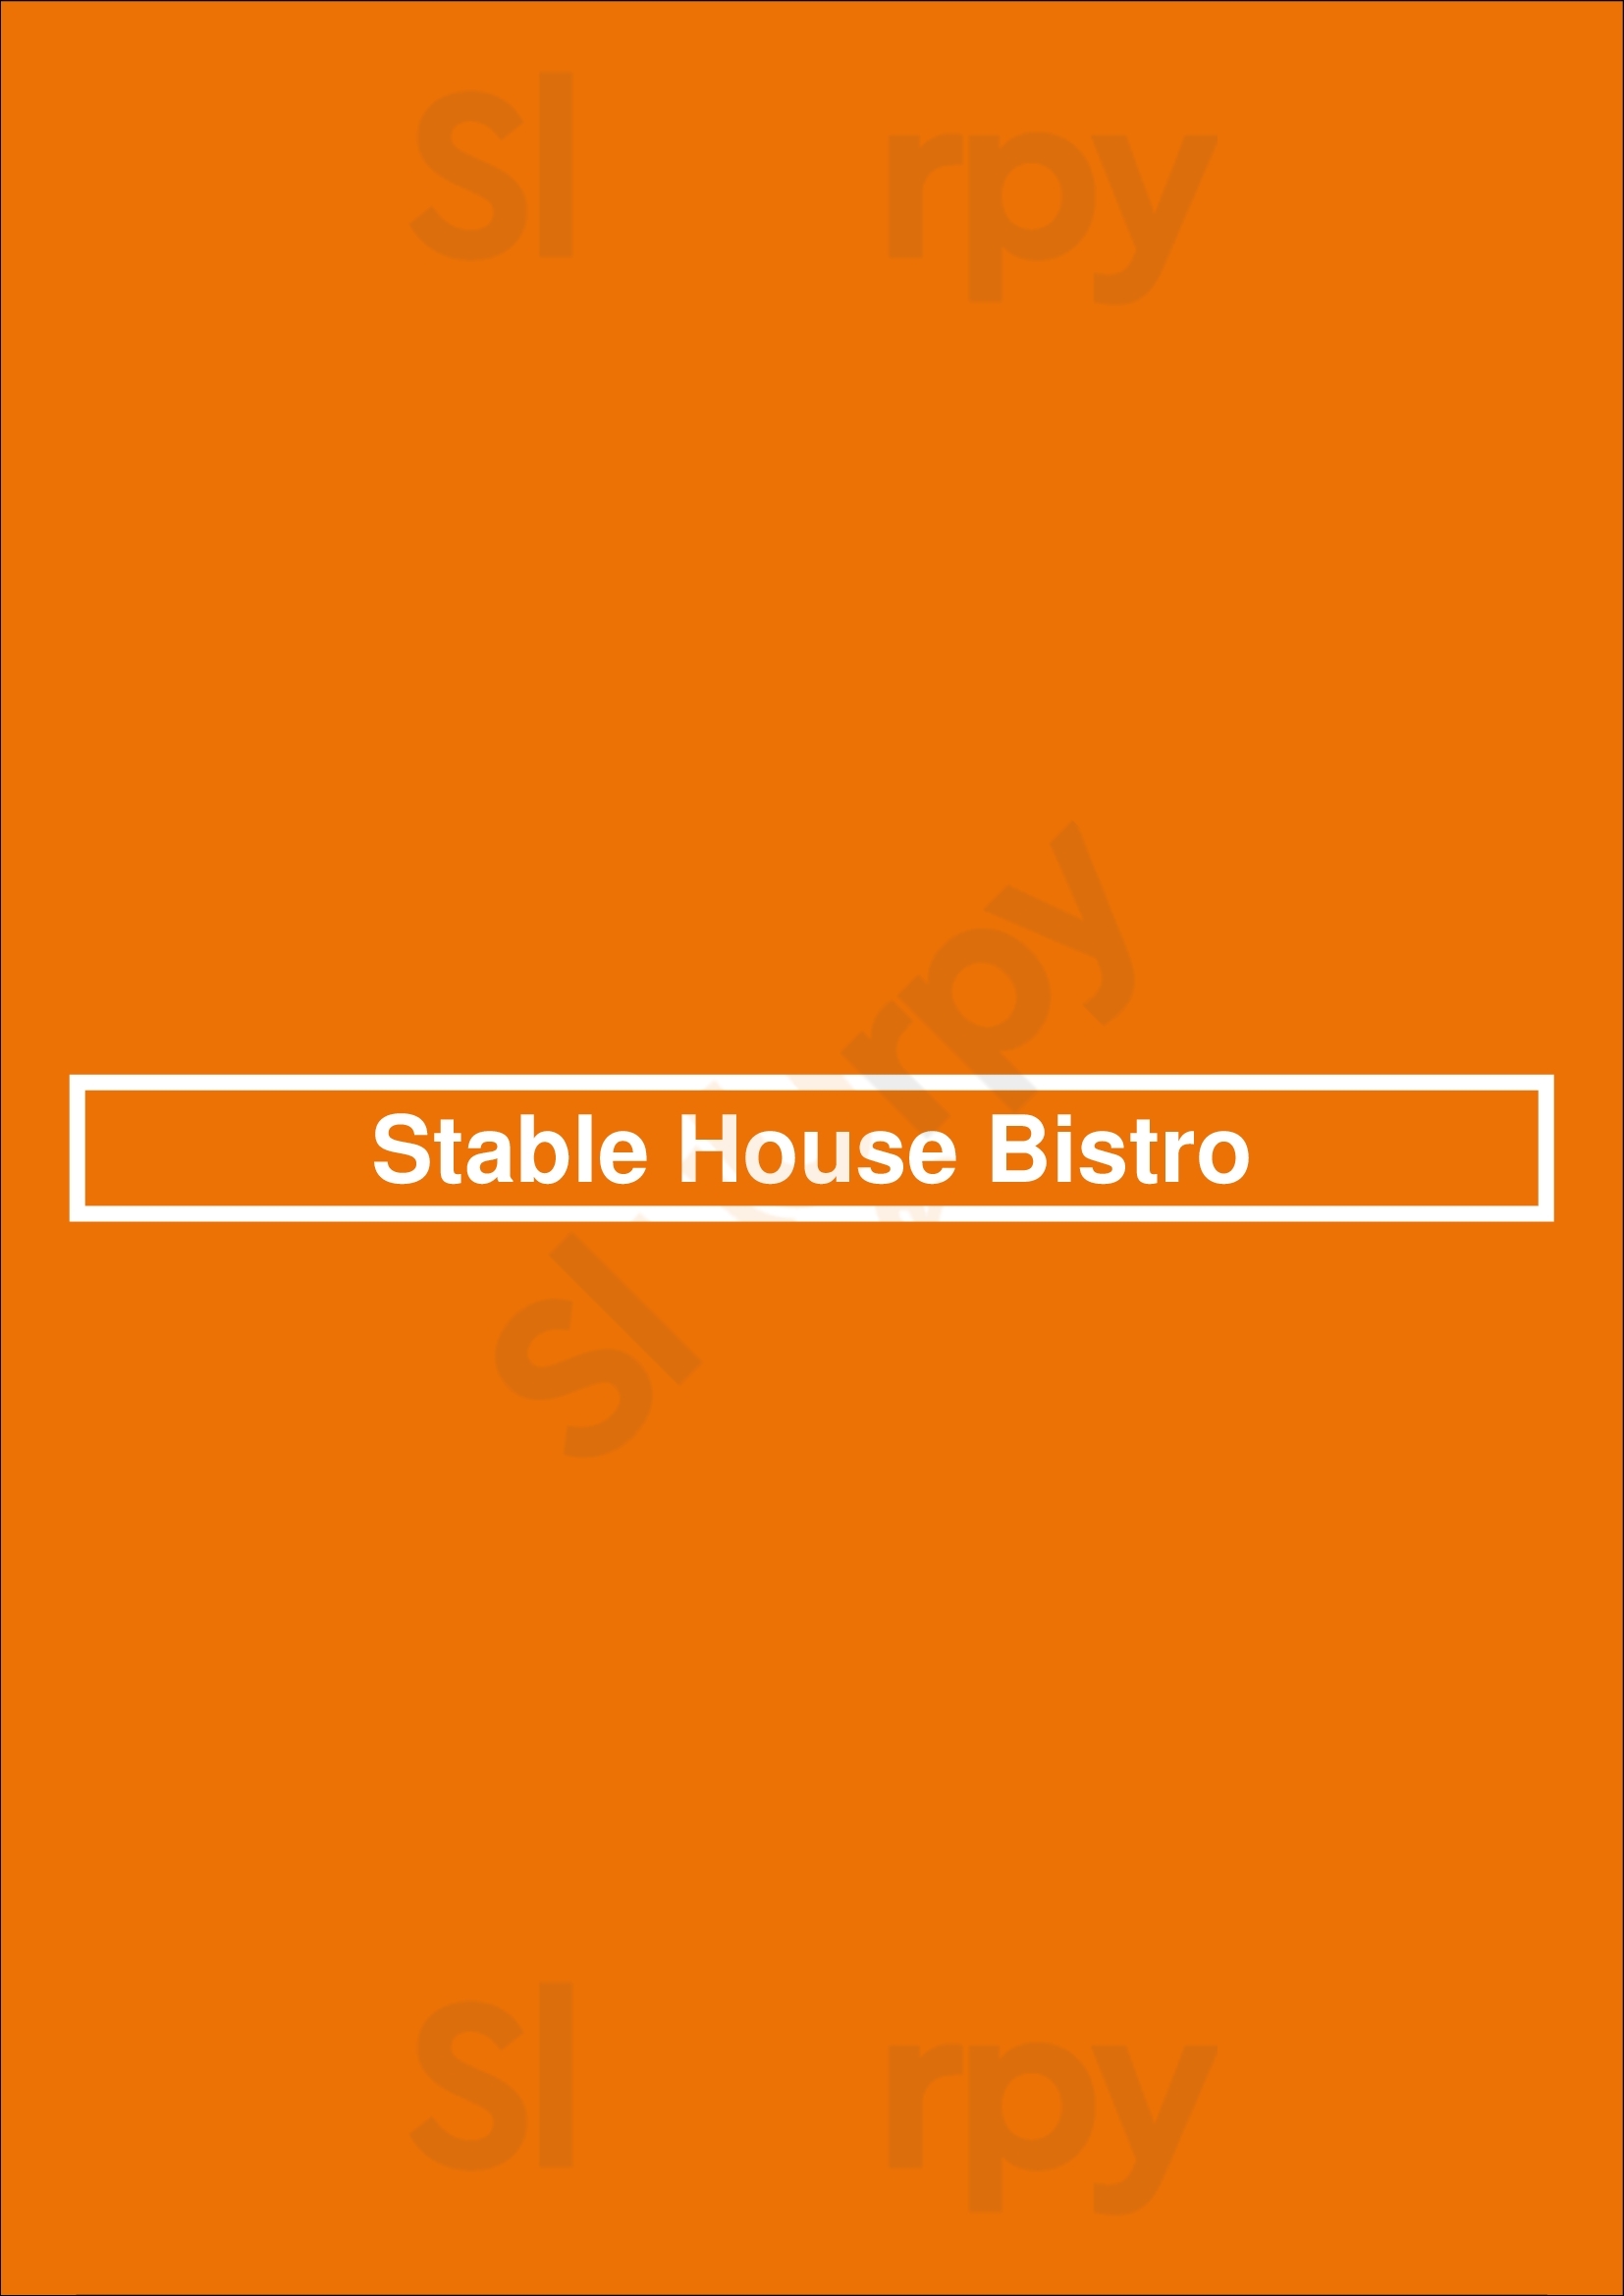 Stable House Bistro Vancouver Menu - 1